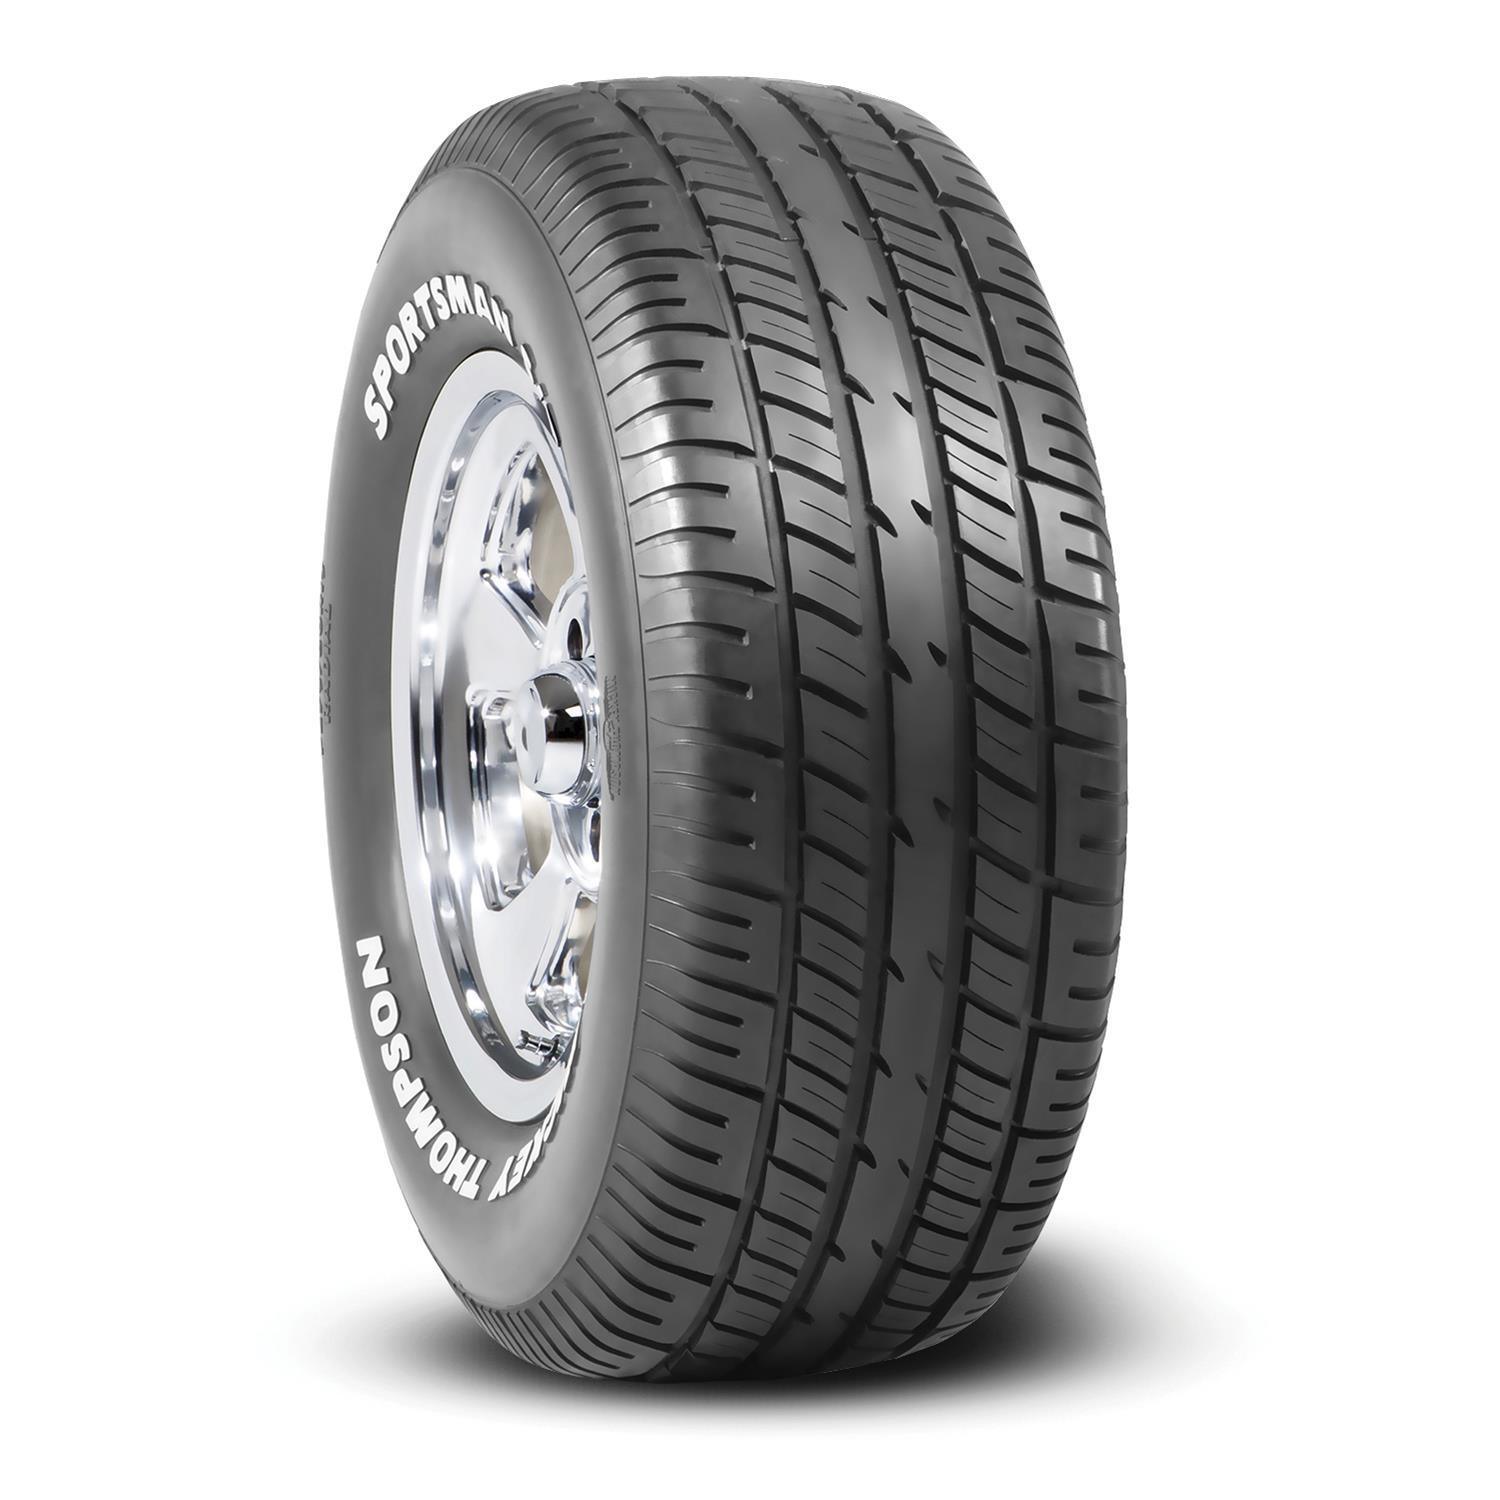 P225/70R15 Sportsman S/T Tire - Burlile Performance Products